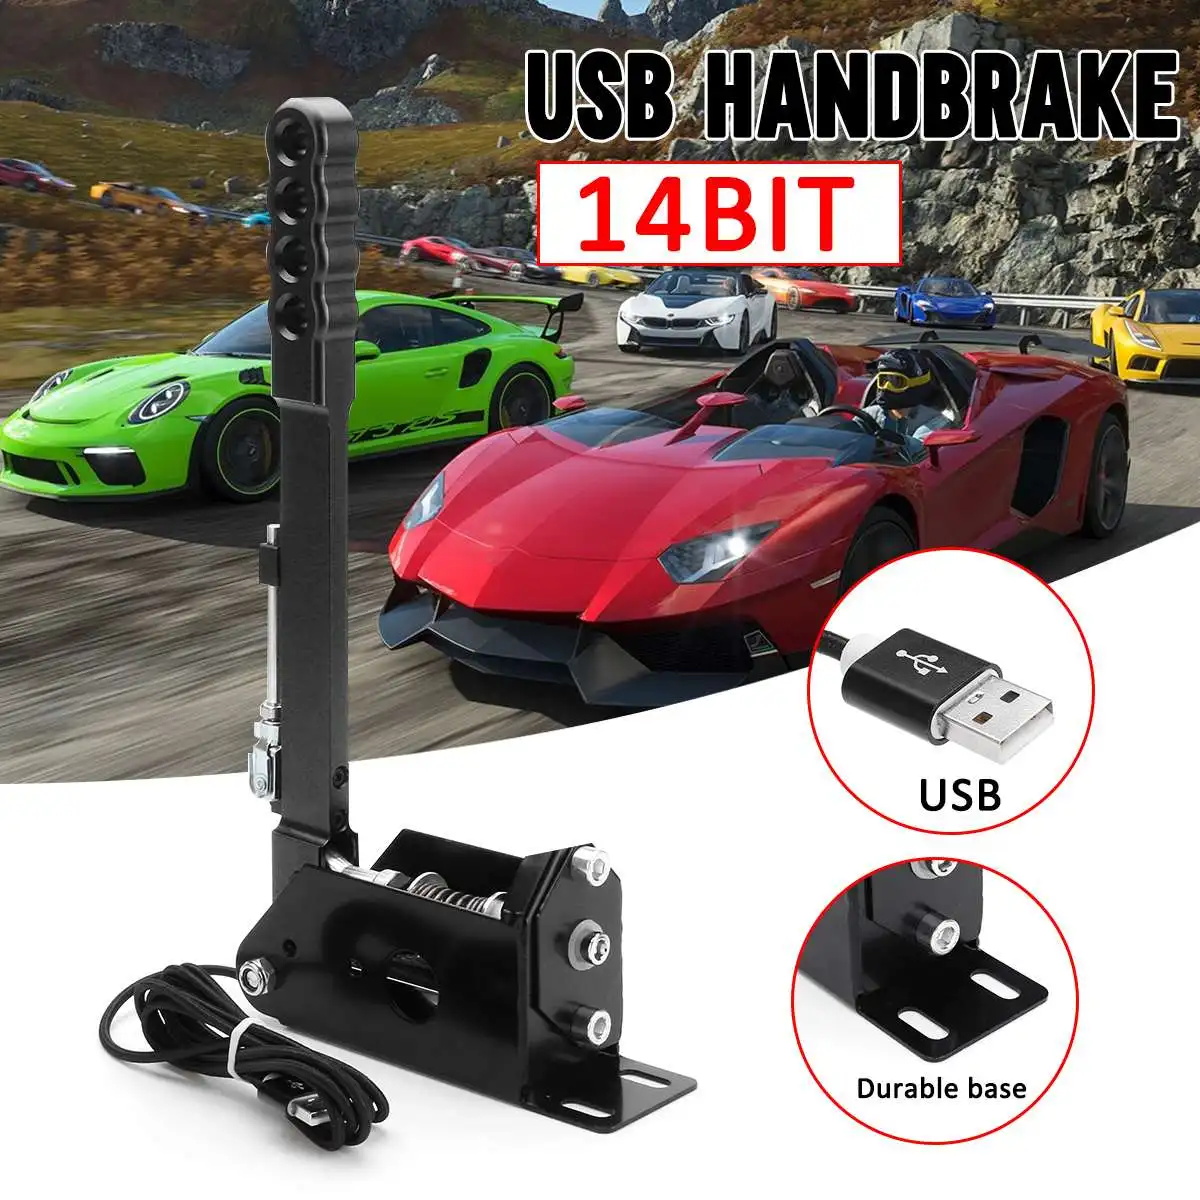 3 Color Universal-16Bit Hall Sensor USB Handbrake Drift Sensor Control Adjustable Height Clamp for G25 G27 G29 T500 DIRT-RALLY - Color: Black